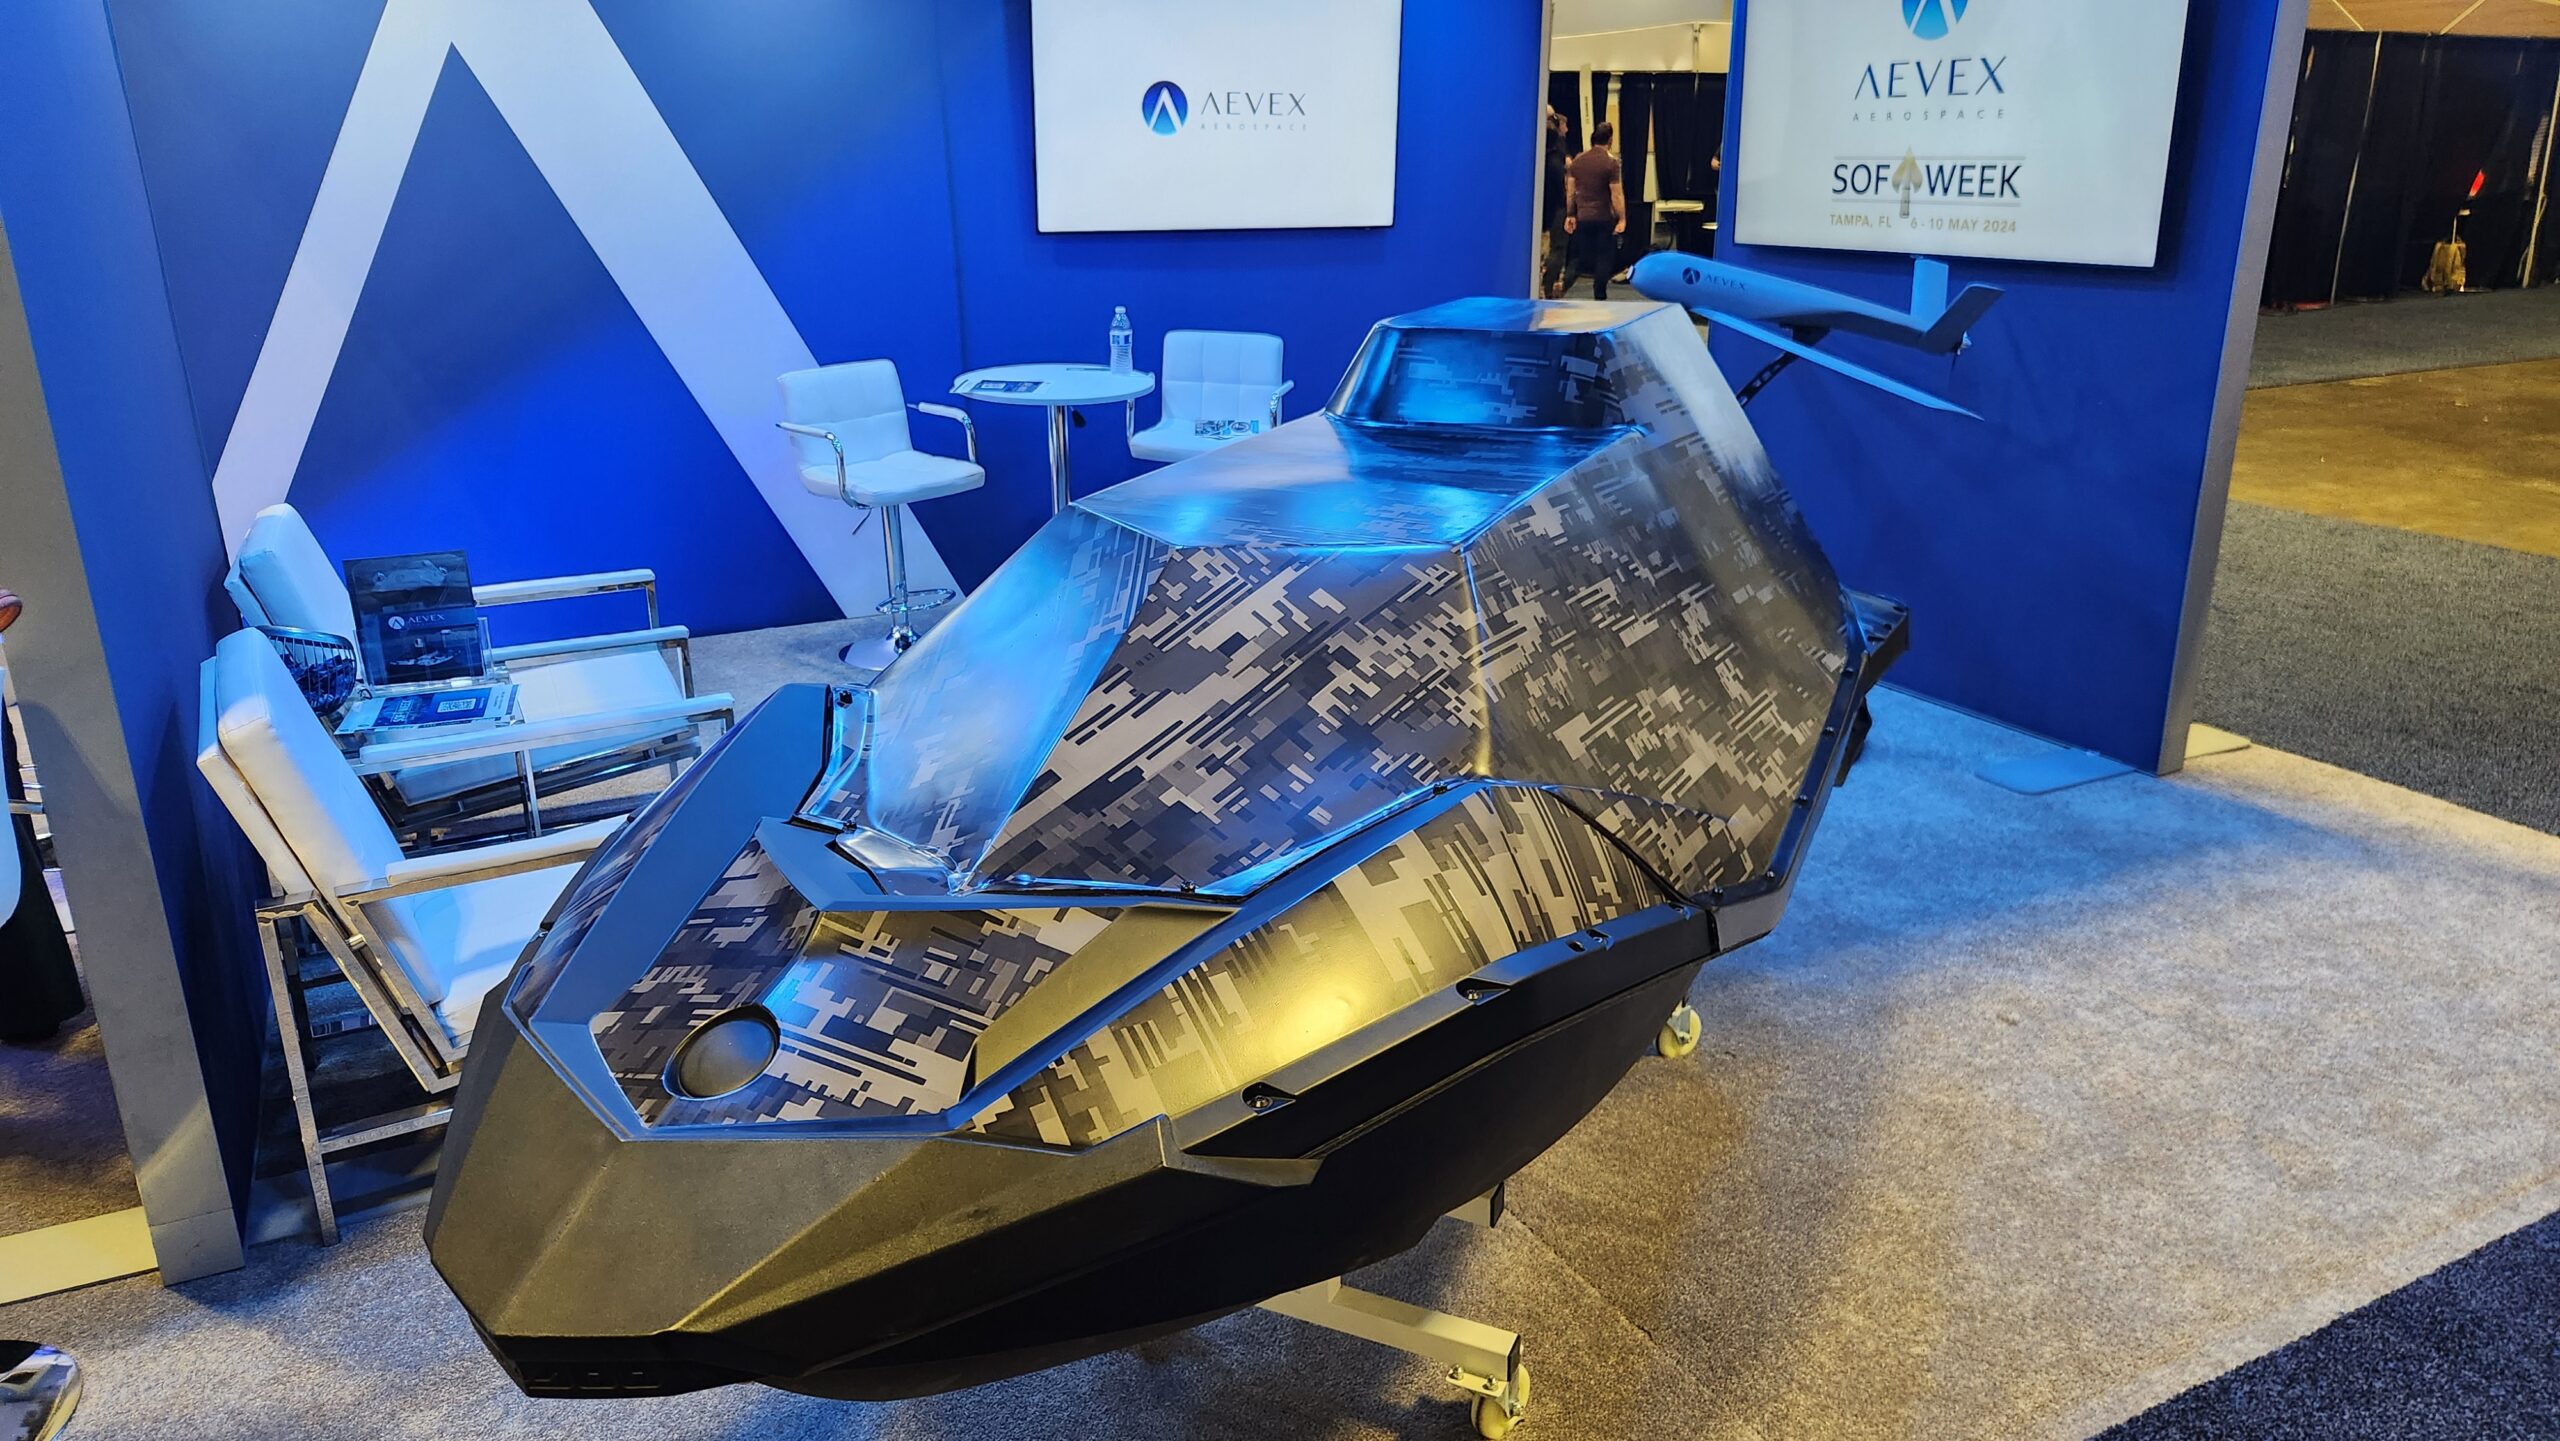 AEVEX Aerospace's Mako Lite sea drone on display at the Tampa Convention Center during SOF Week. (Matt Gunn/AEVEX Aerospace)